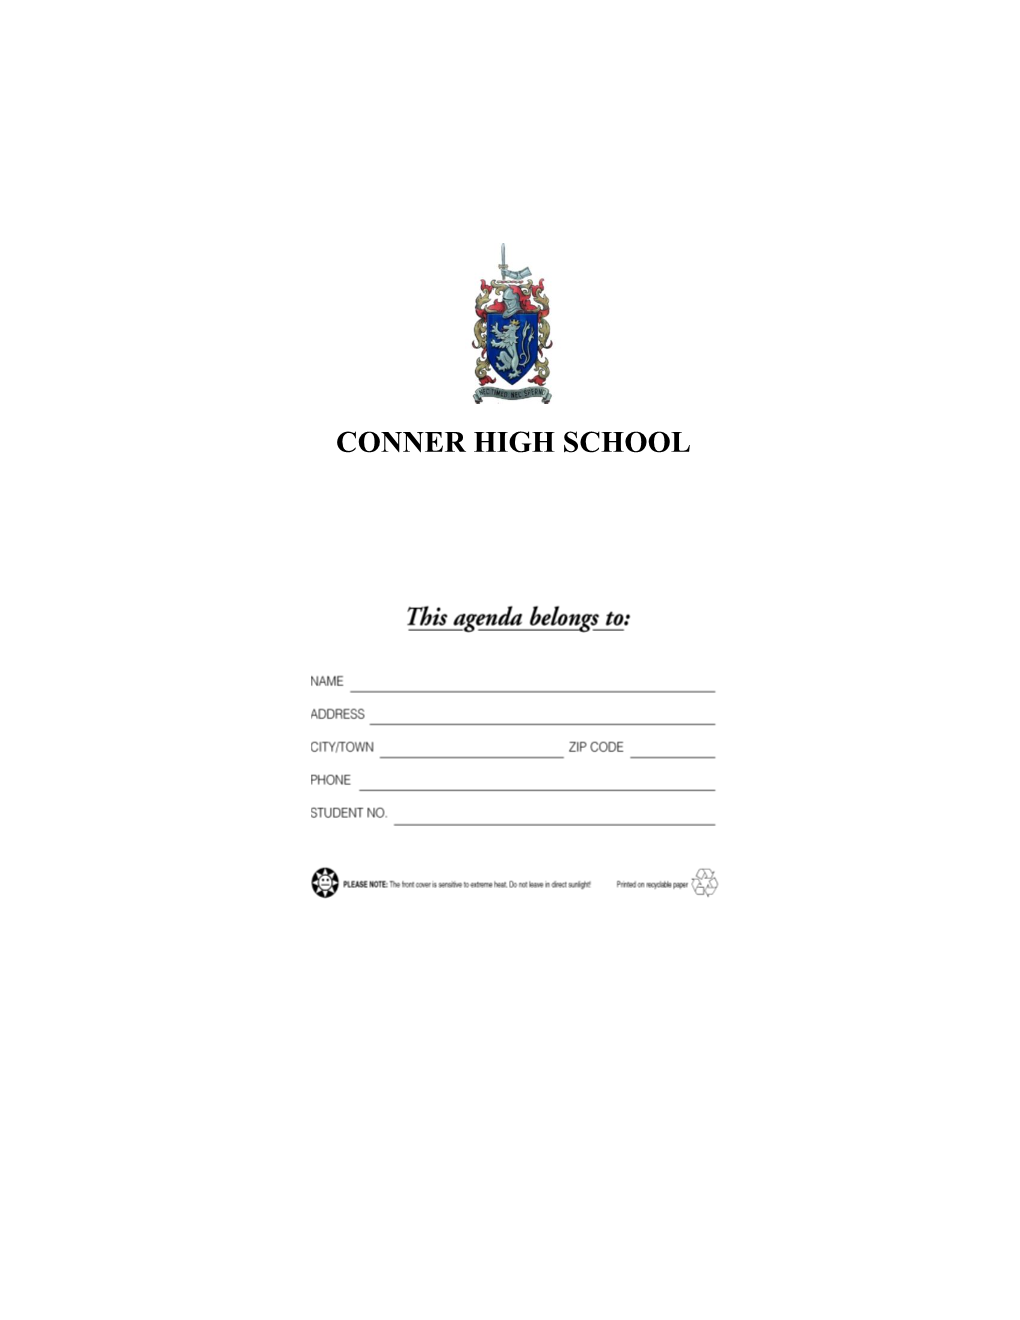 Conner Student Handbook 2020-2021